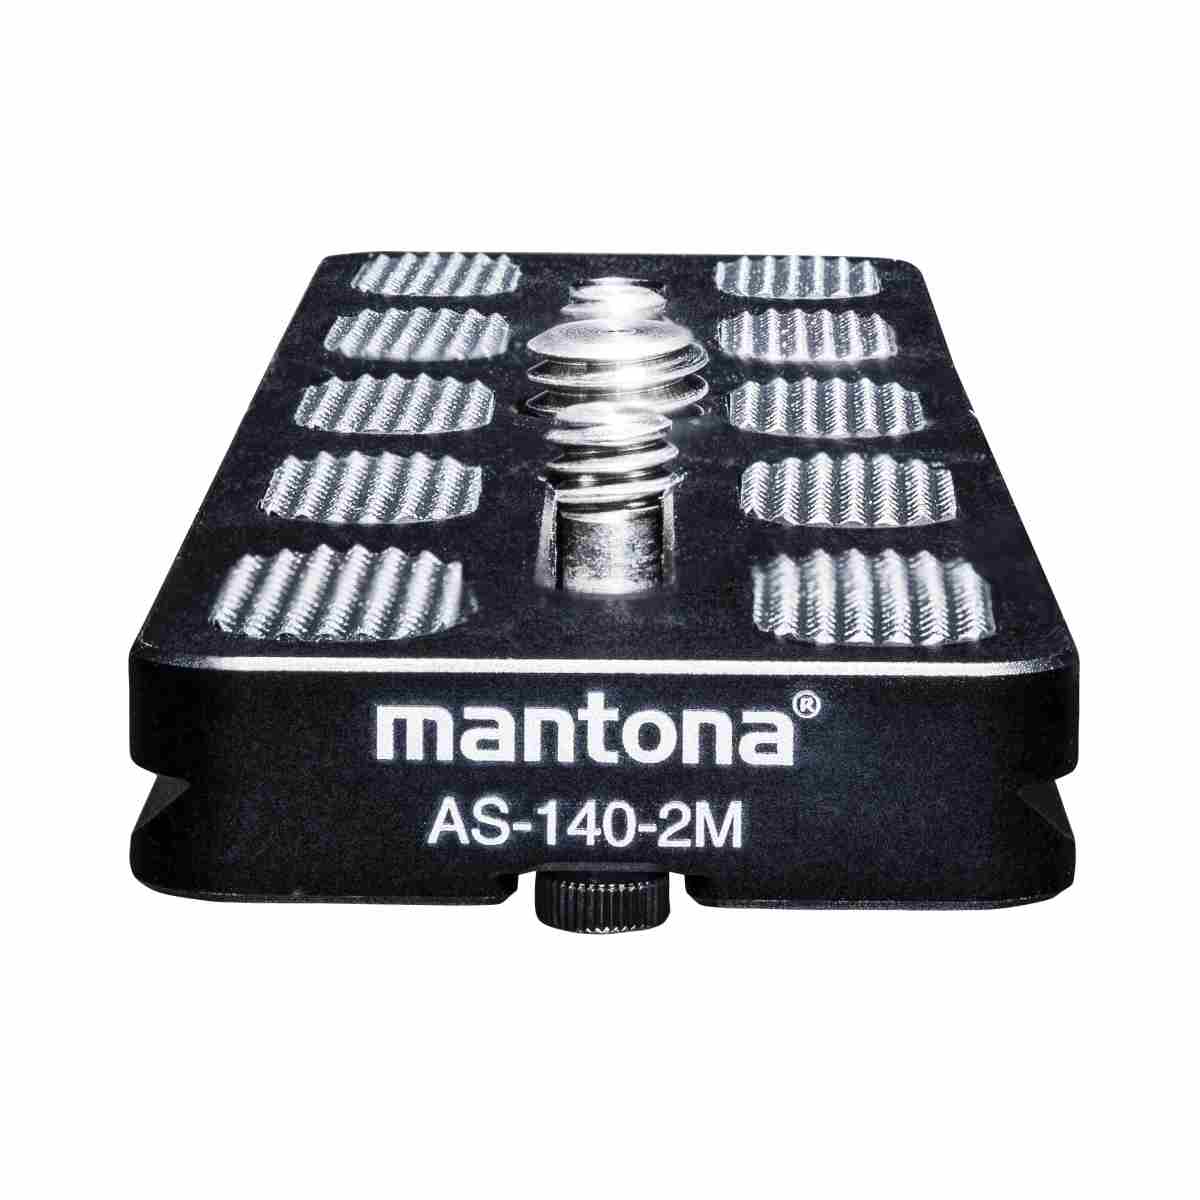 Mantona AS-140-2M quick release plate